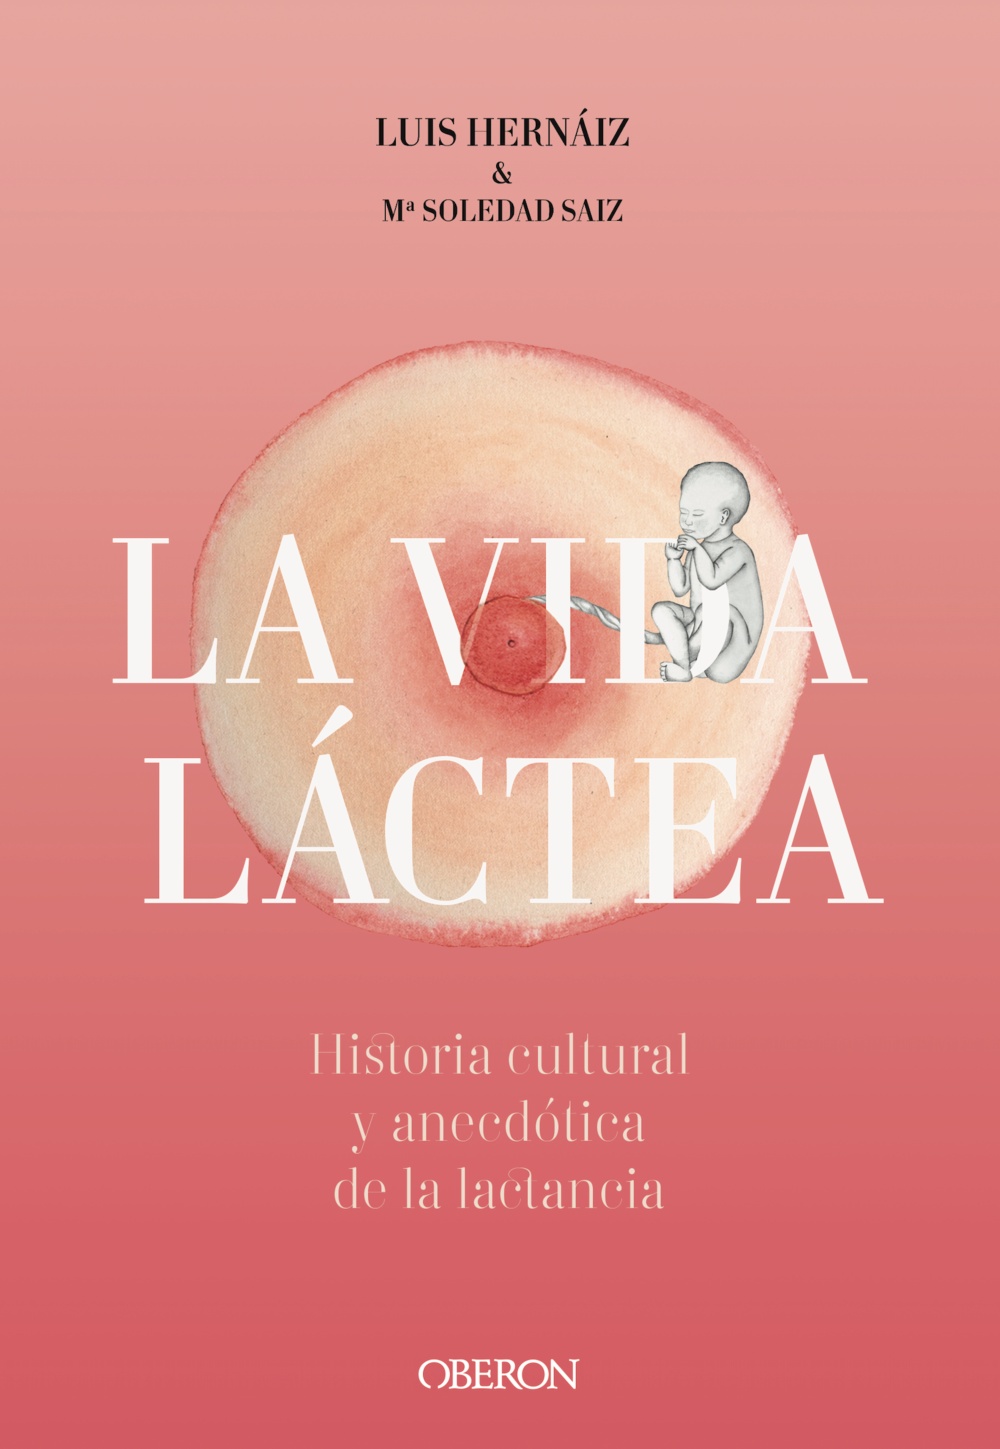 vida-lactea-historia-cultural-y-anecdotica-de-la-lactancia-978-84-415-4261-7.jpg